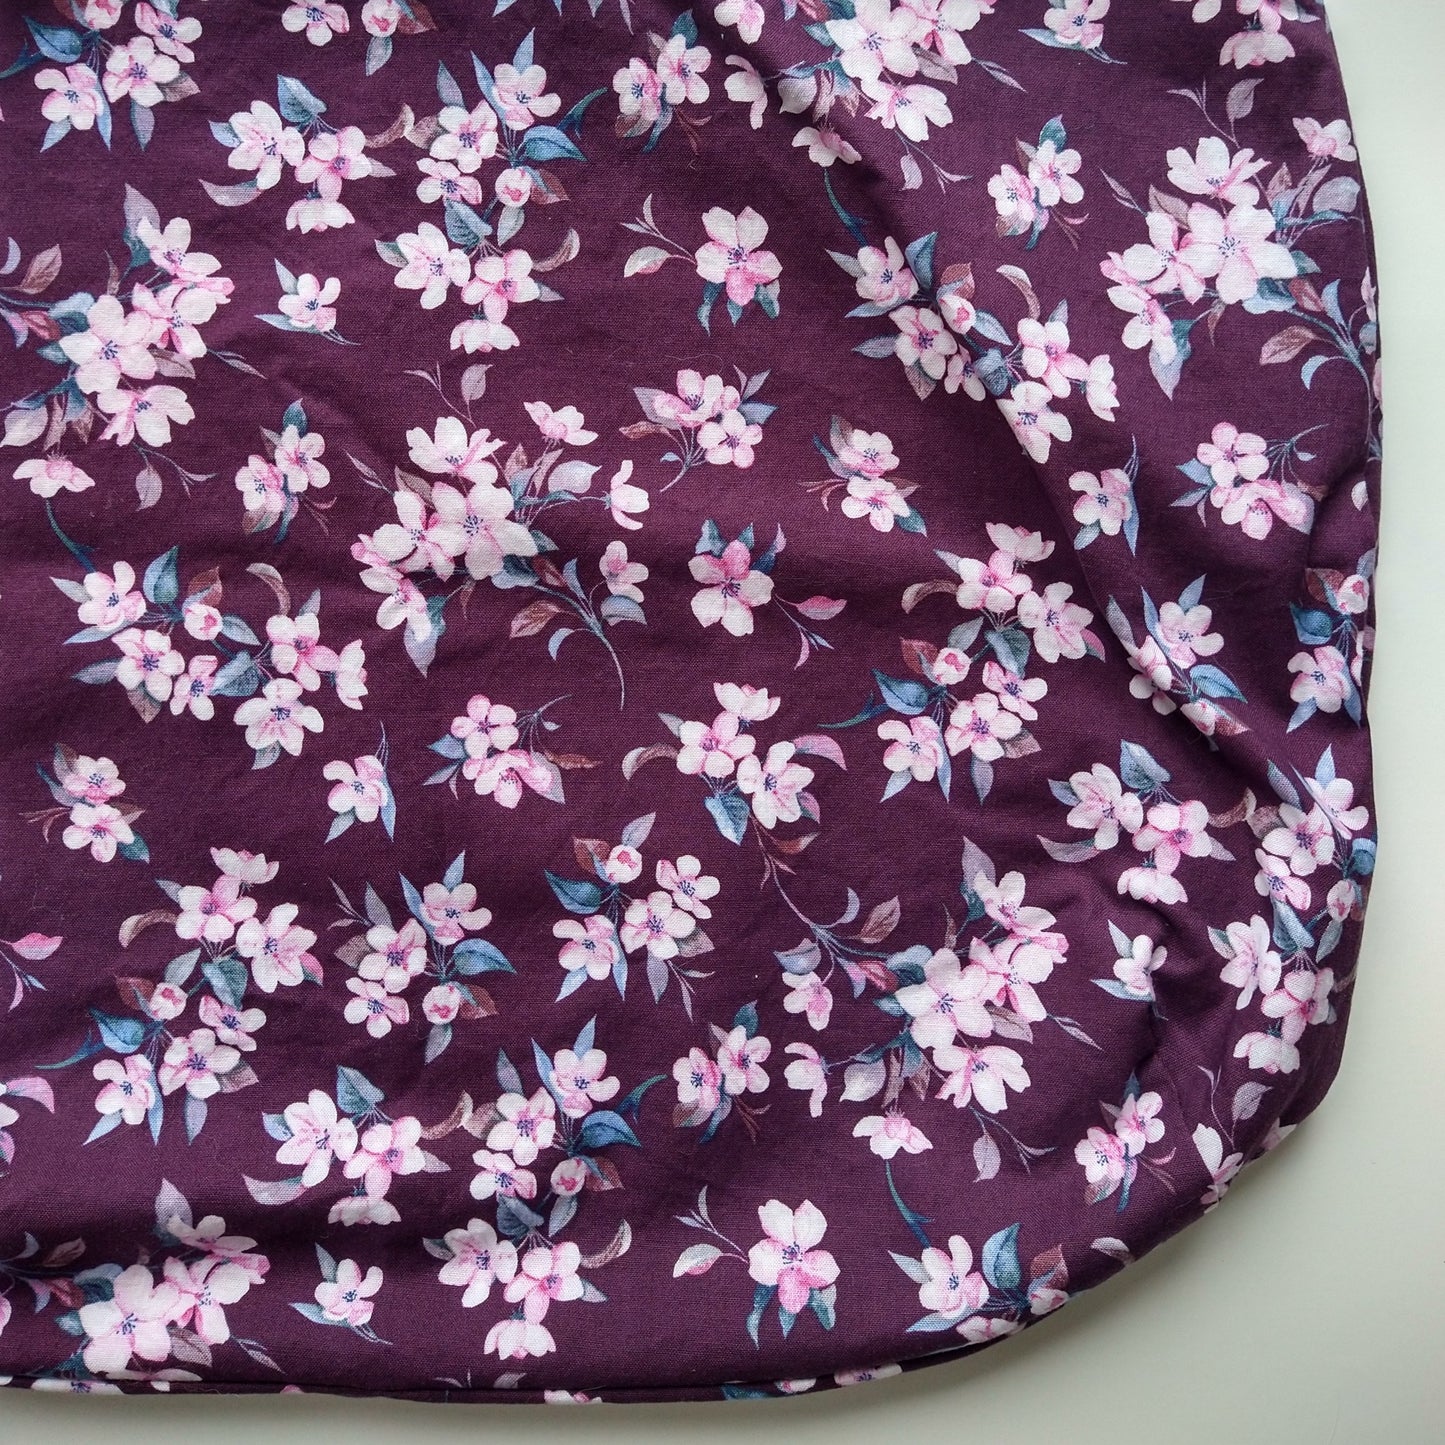 Shopping bag, reversible, size medium, purple flowers (Handmade in Canada)